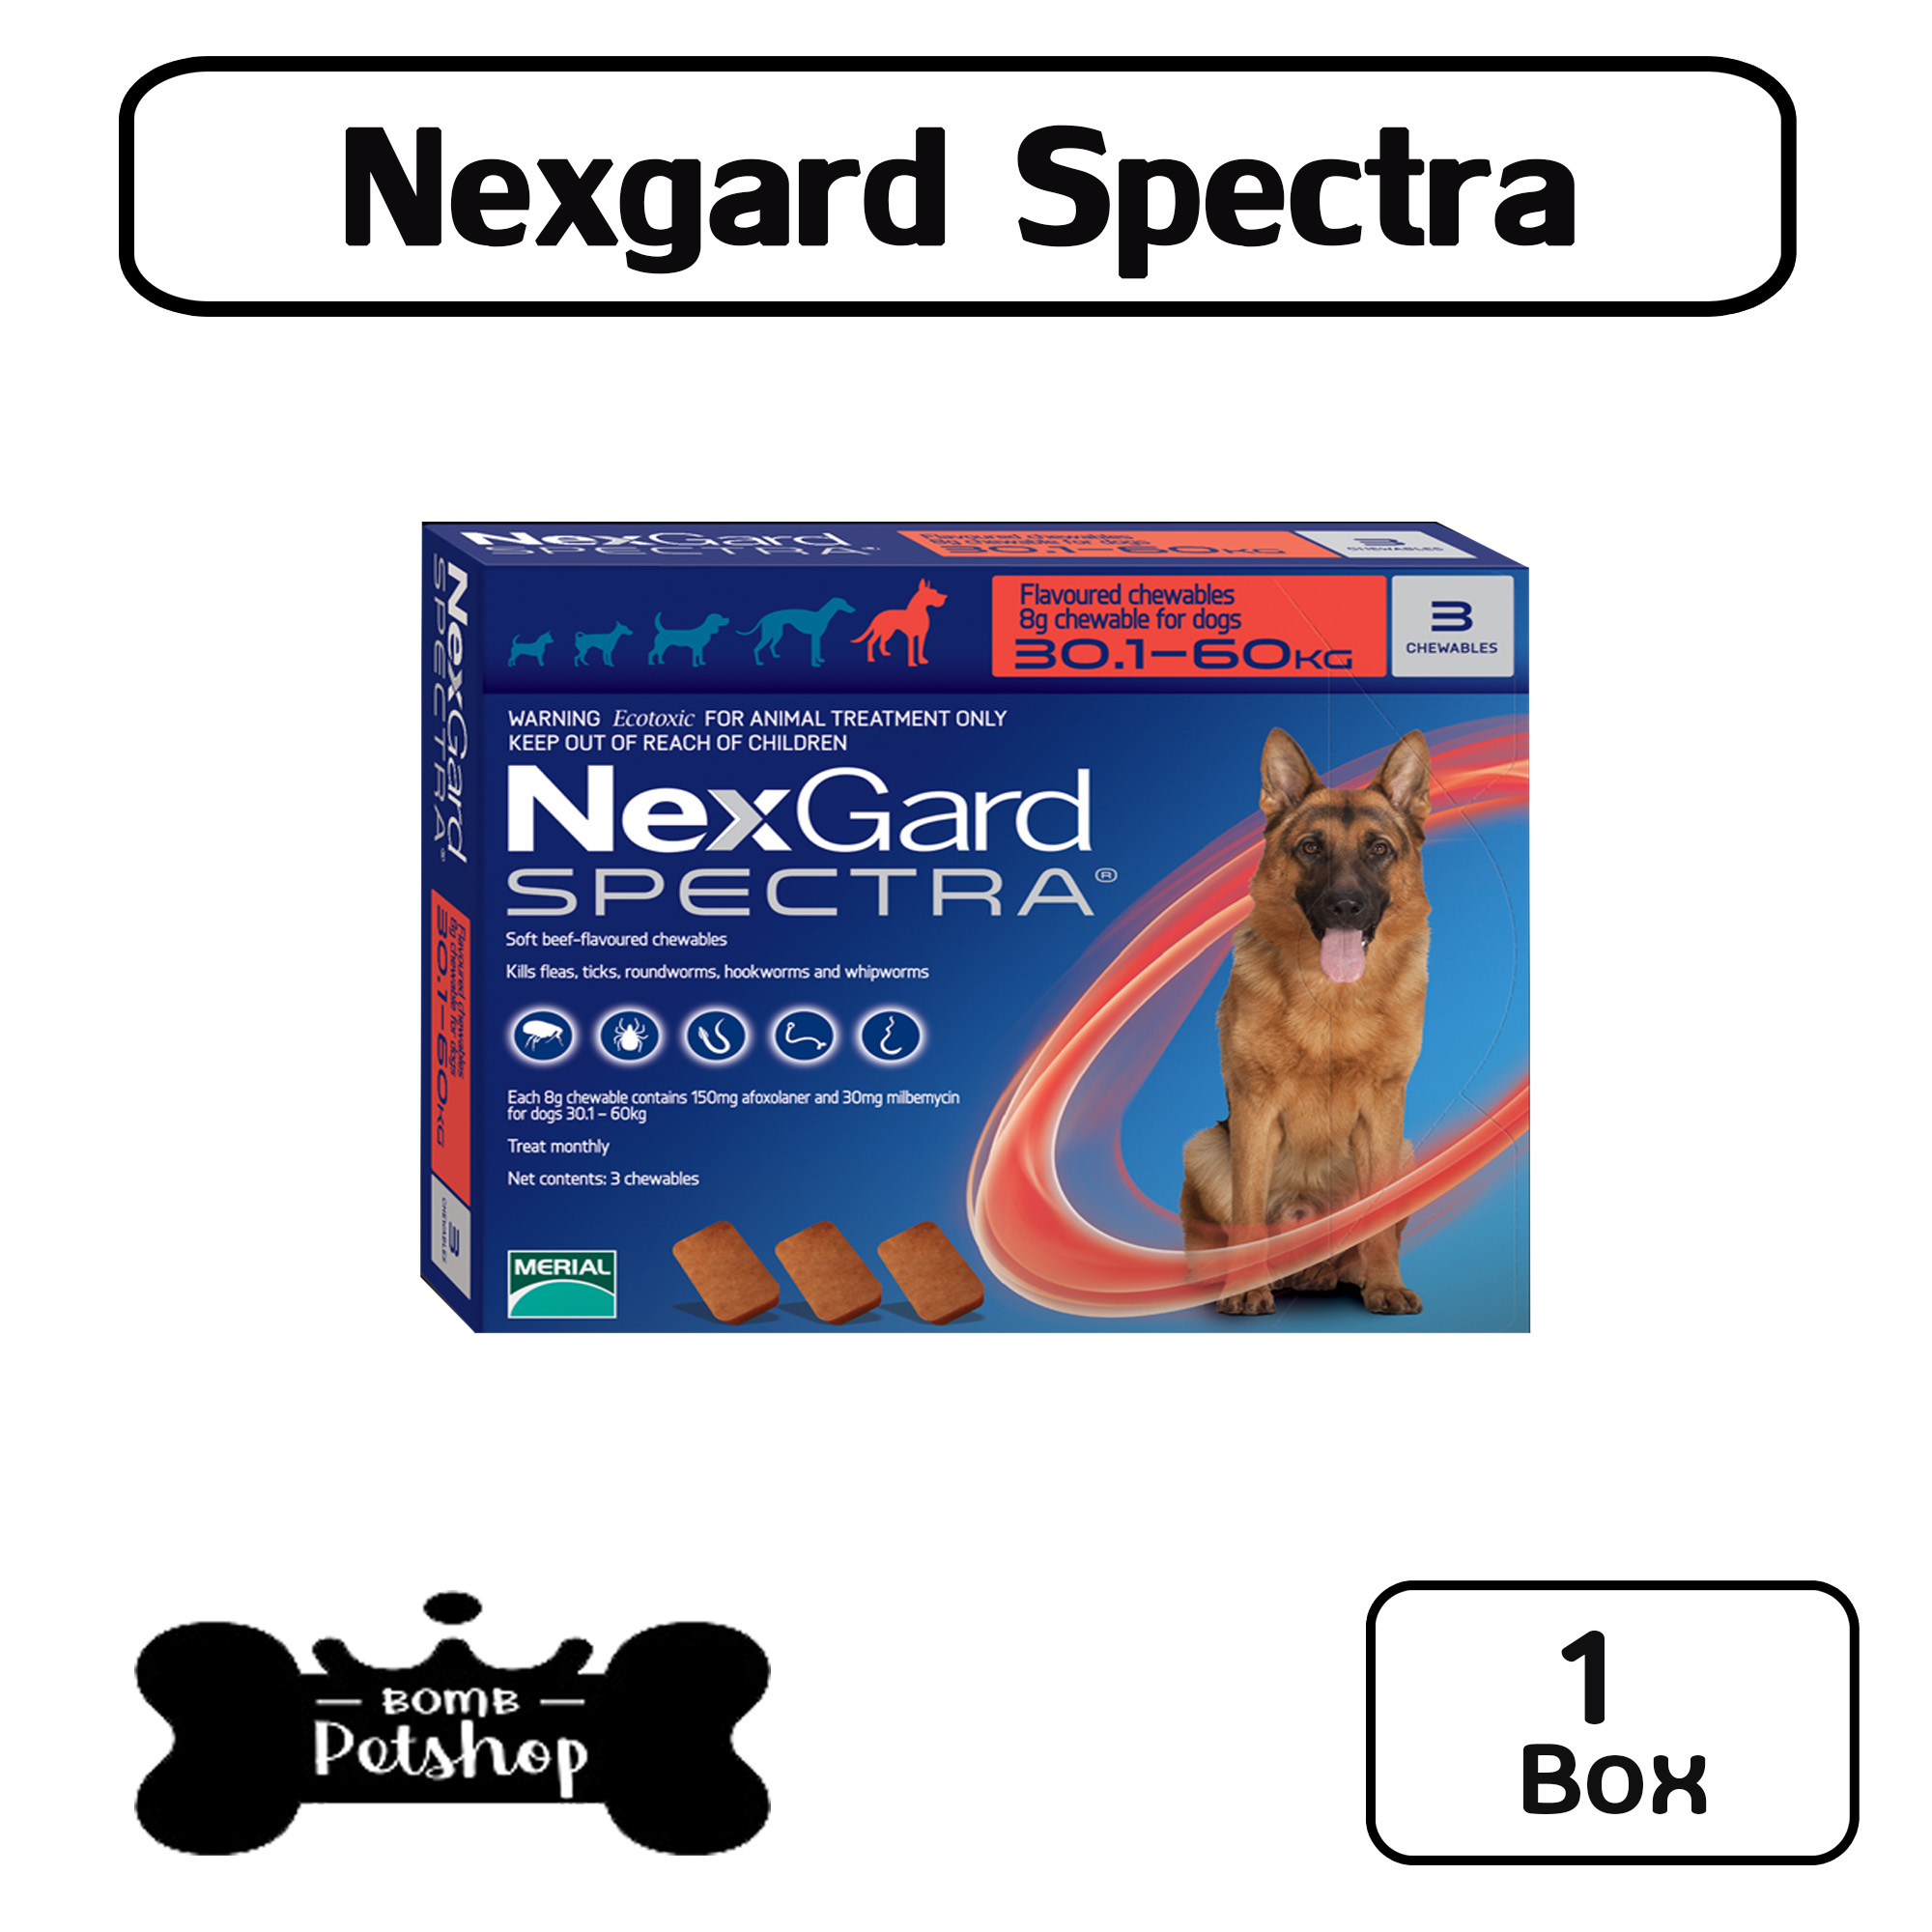 Nexgard Spectra Dog Tick Flea 1 กล่อง นน. 30-60 kg (EXP 10-2022)